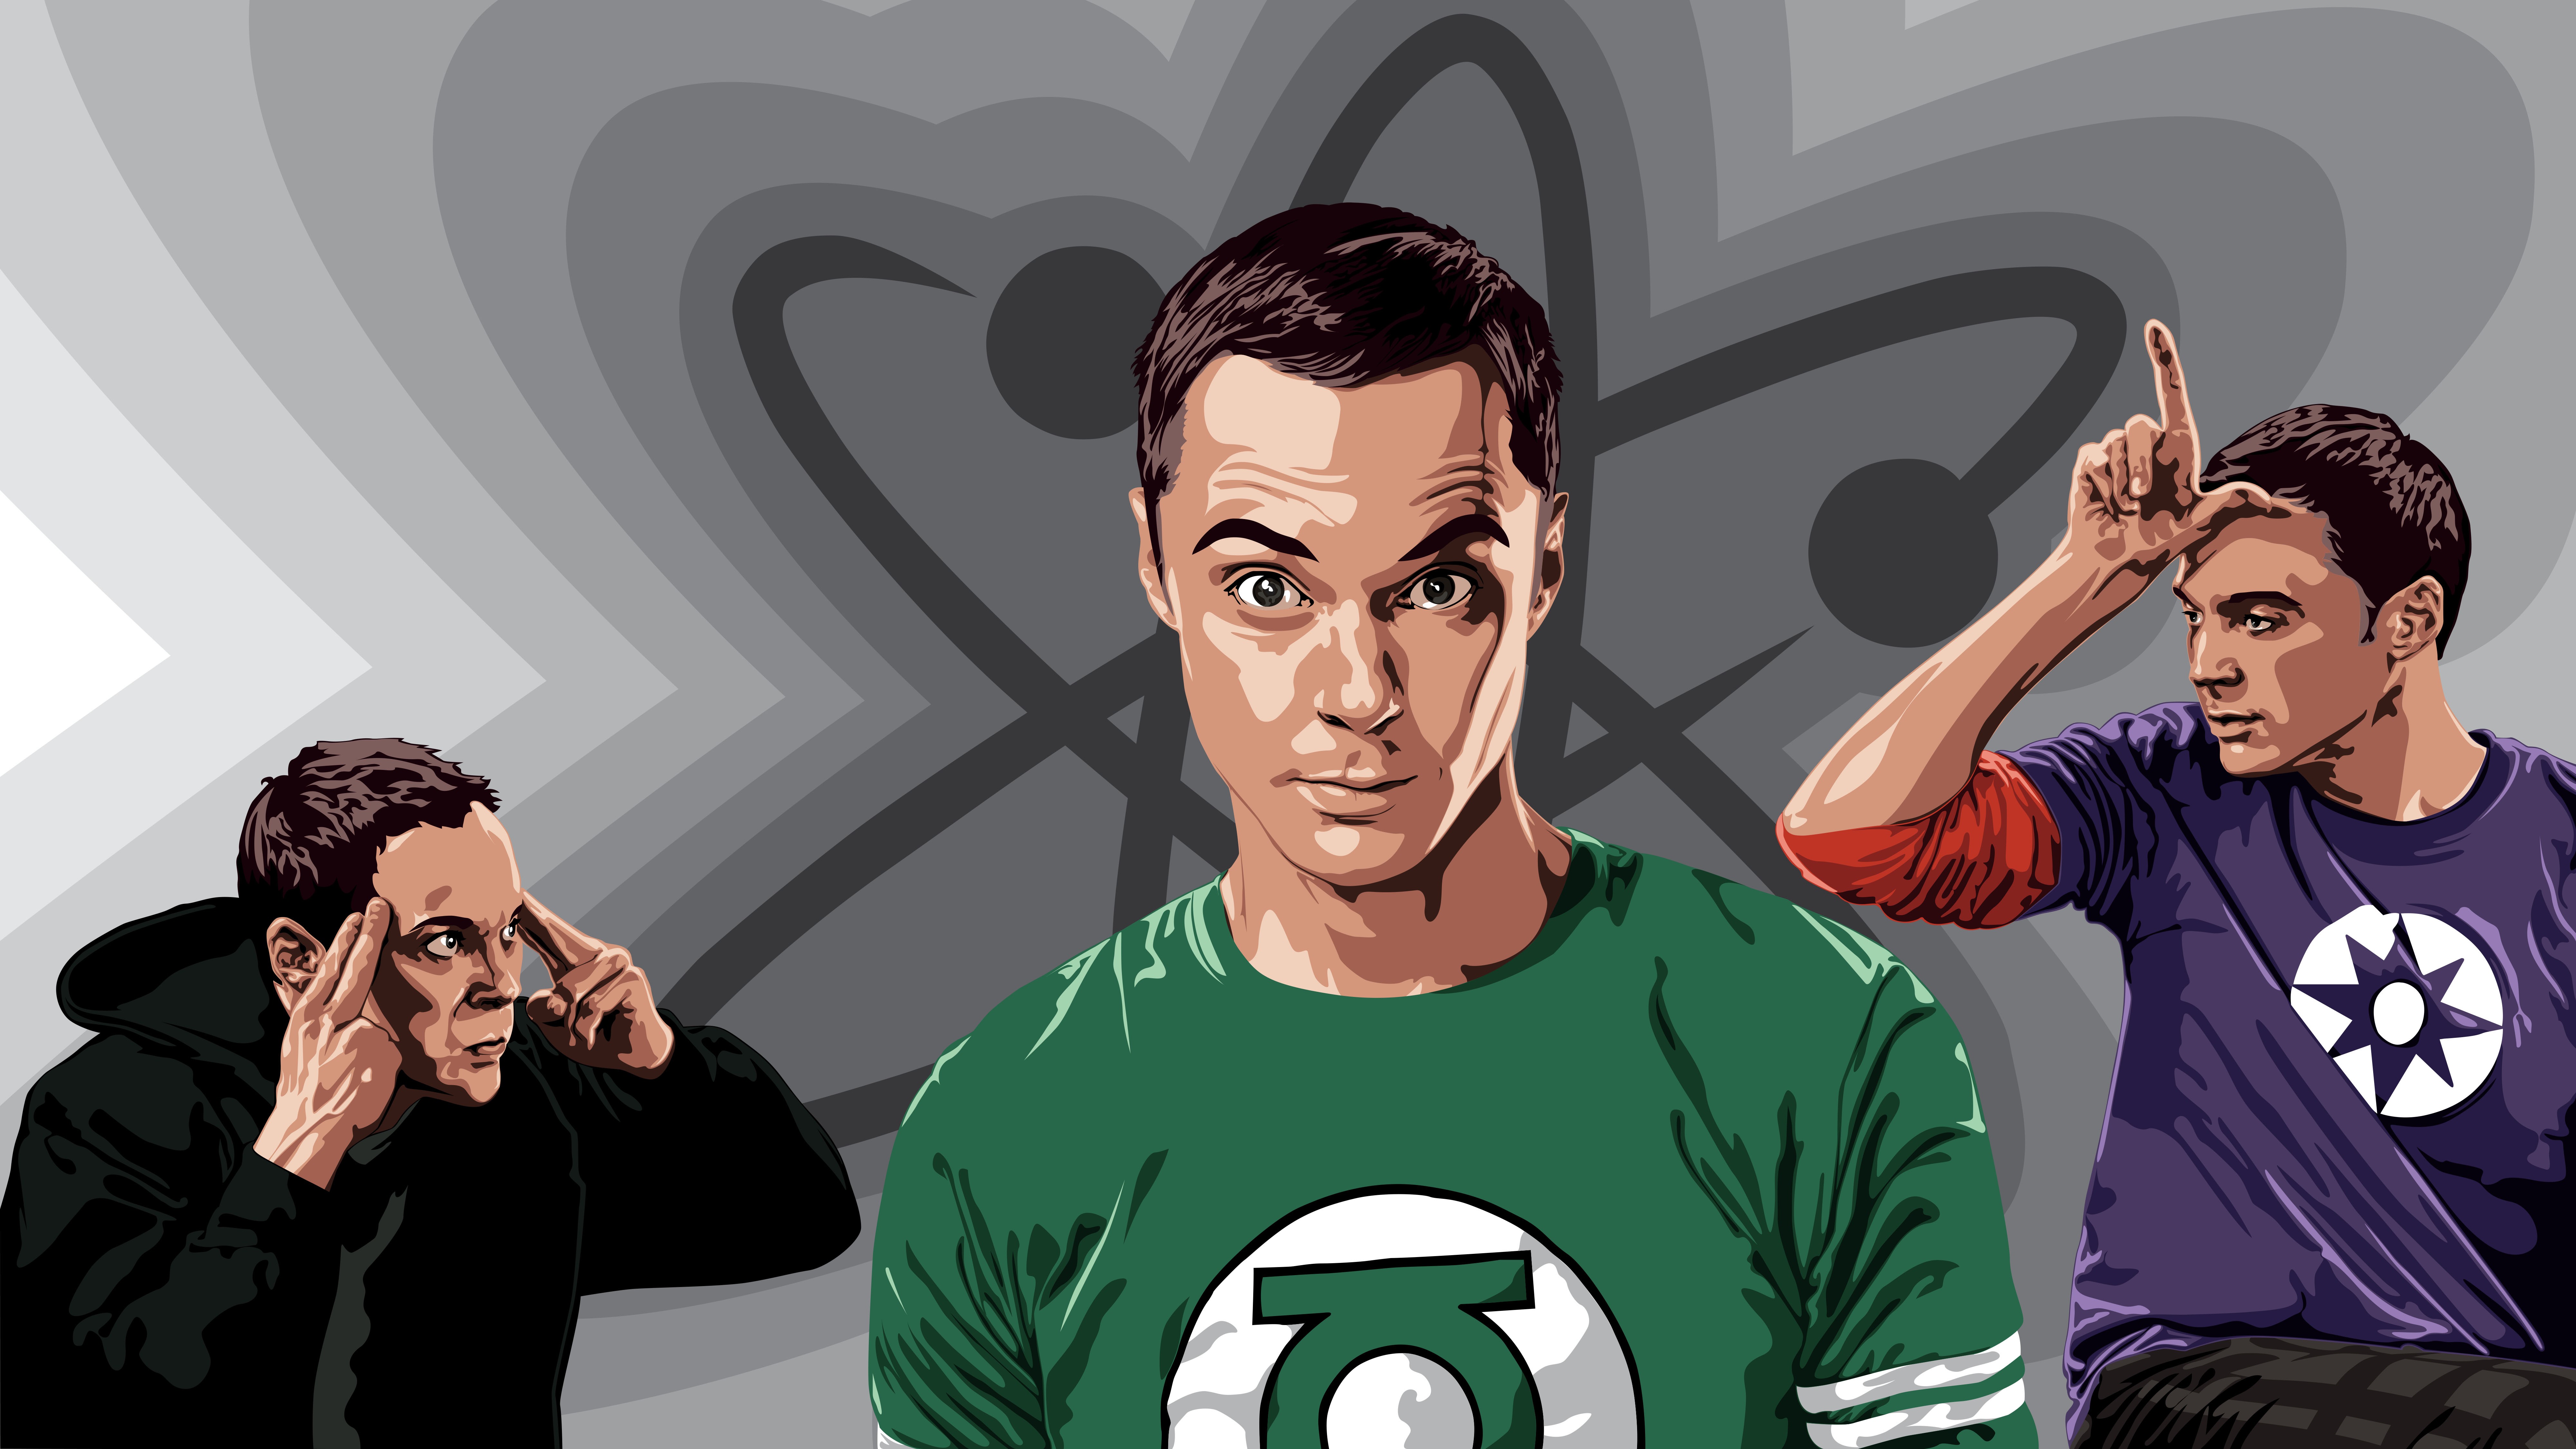 General 8000x4500 Jim Parsons popculture The Big Bang Theory Sheldon Cooper TV series face men